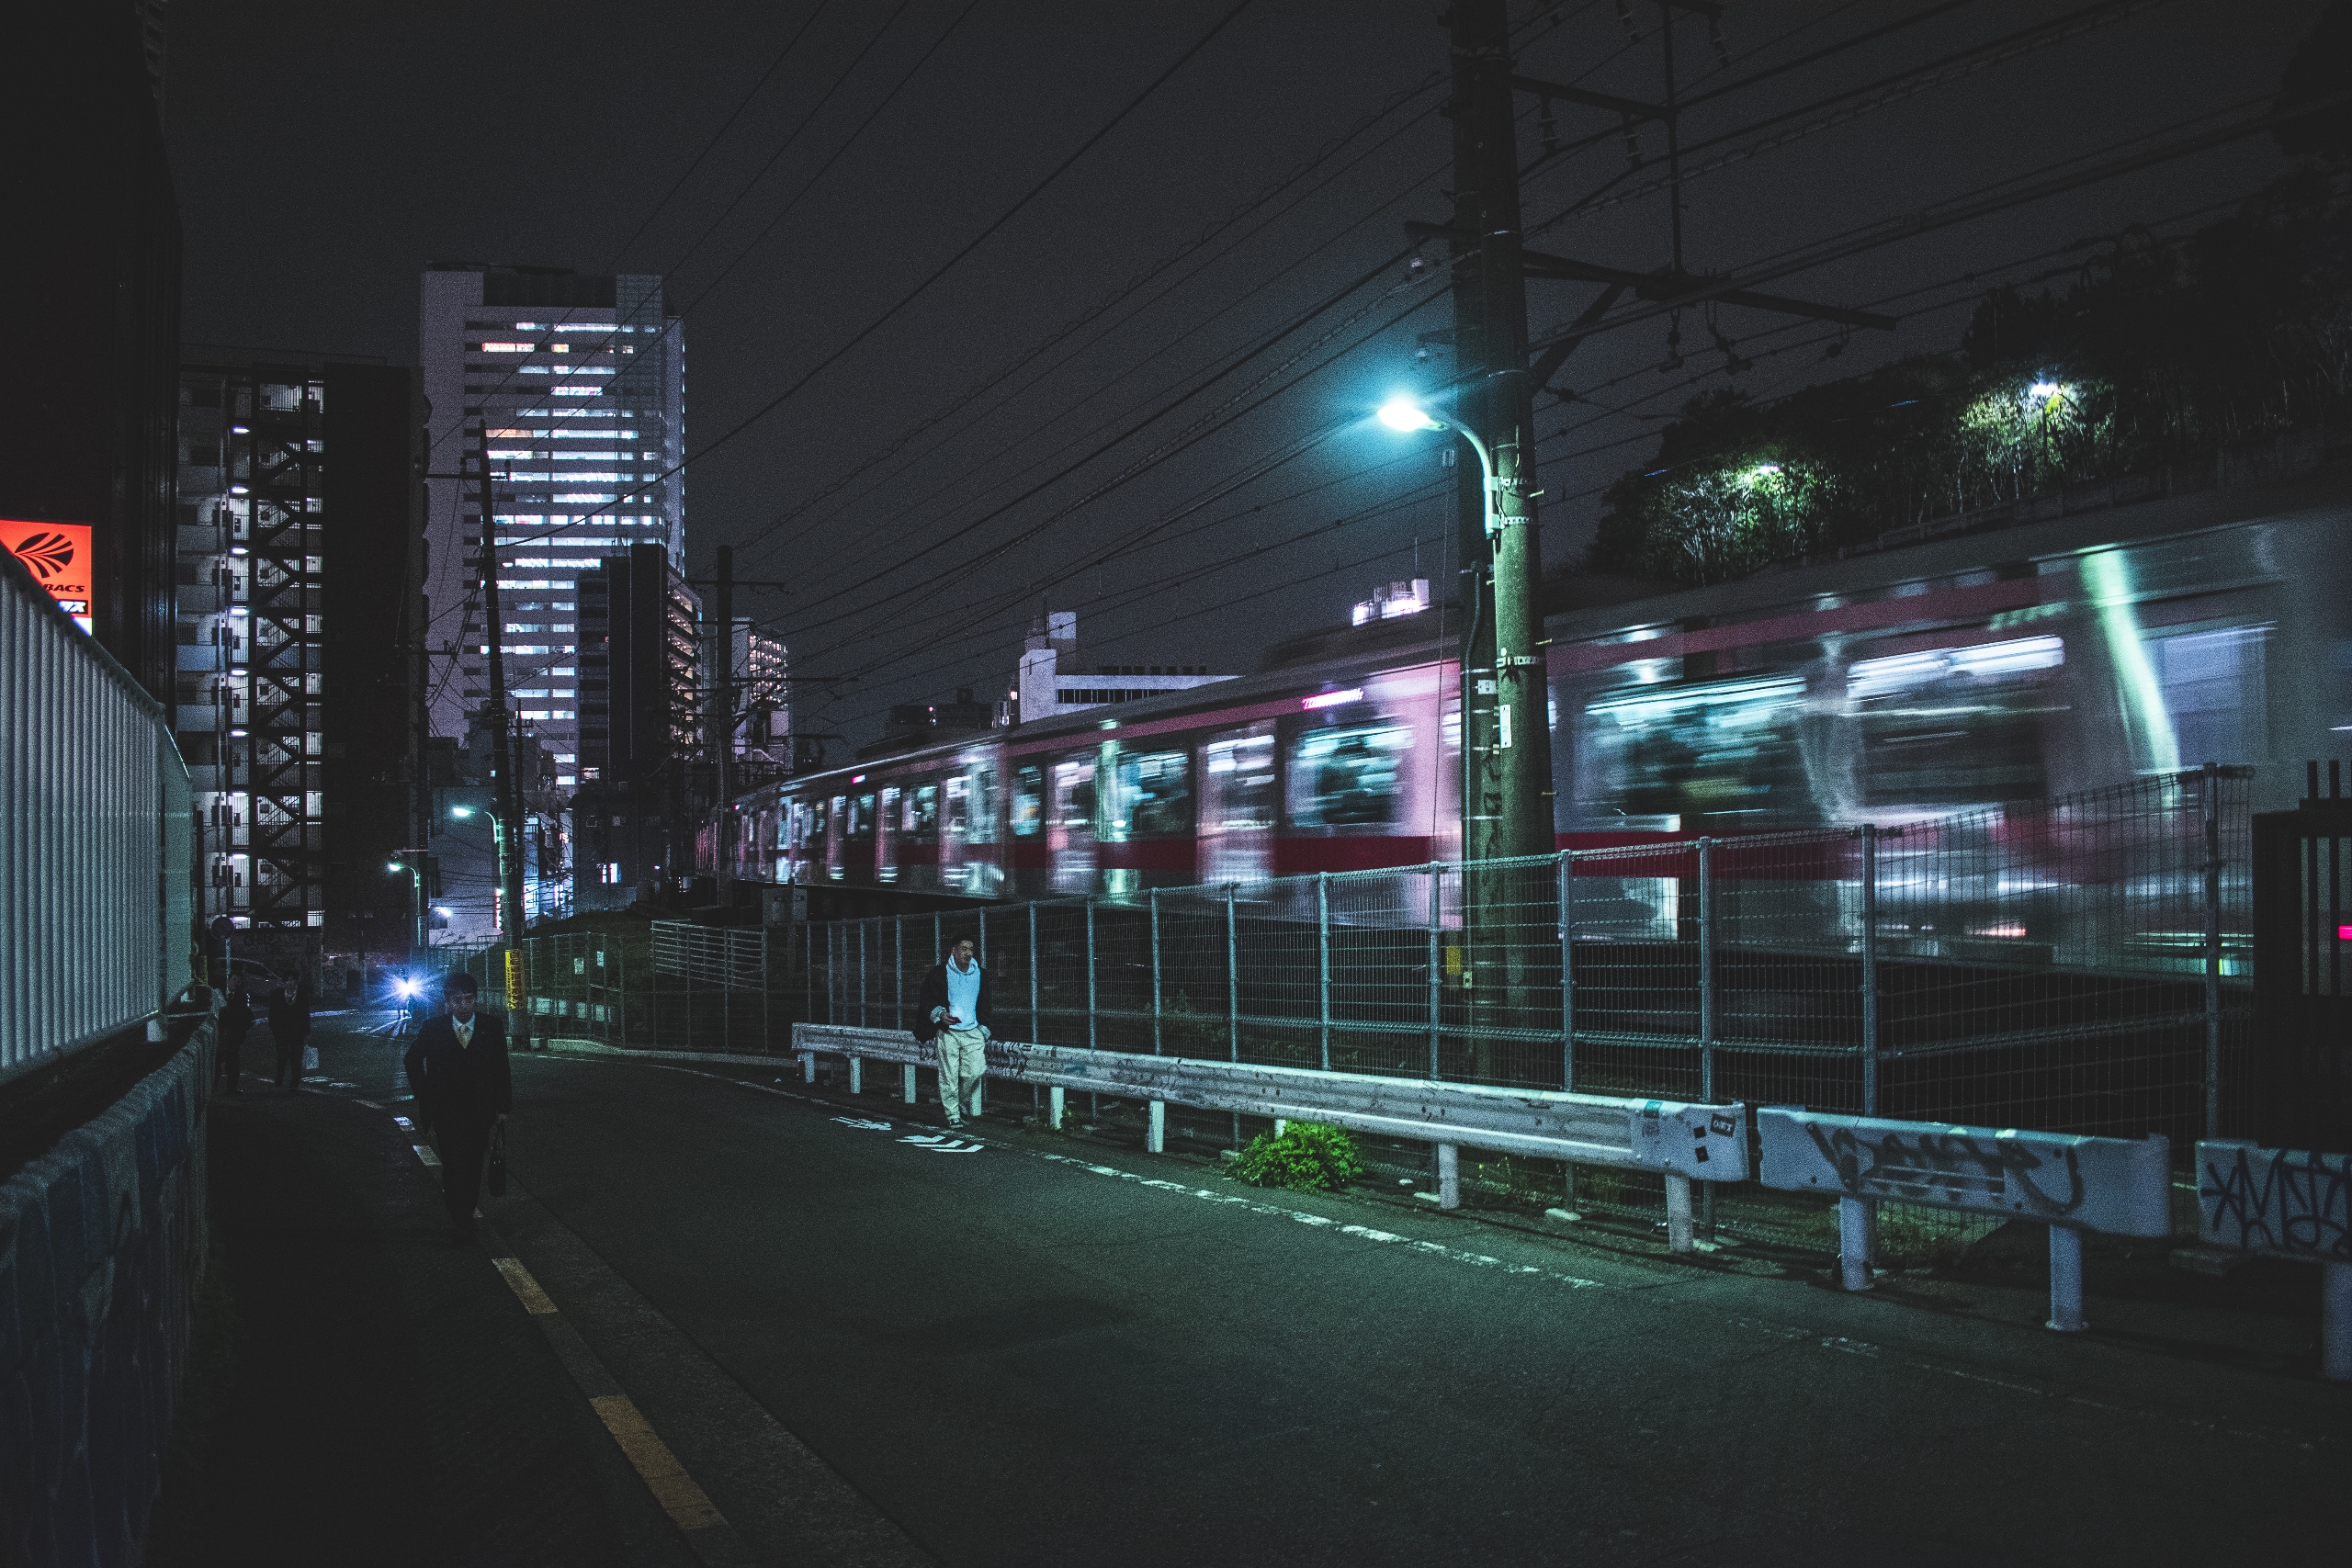 General 2560x1707 Japan night cityscape Tokyo train urban street Asia